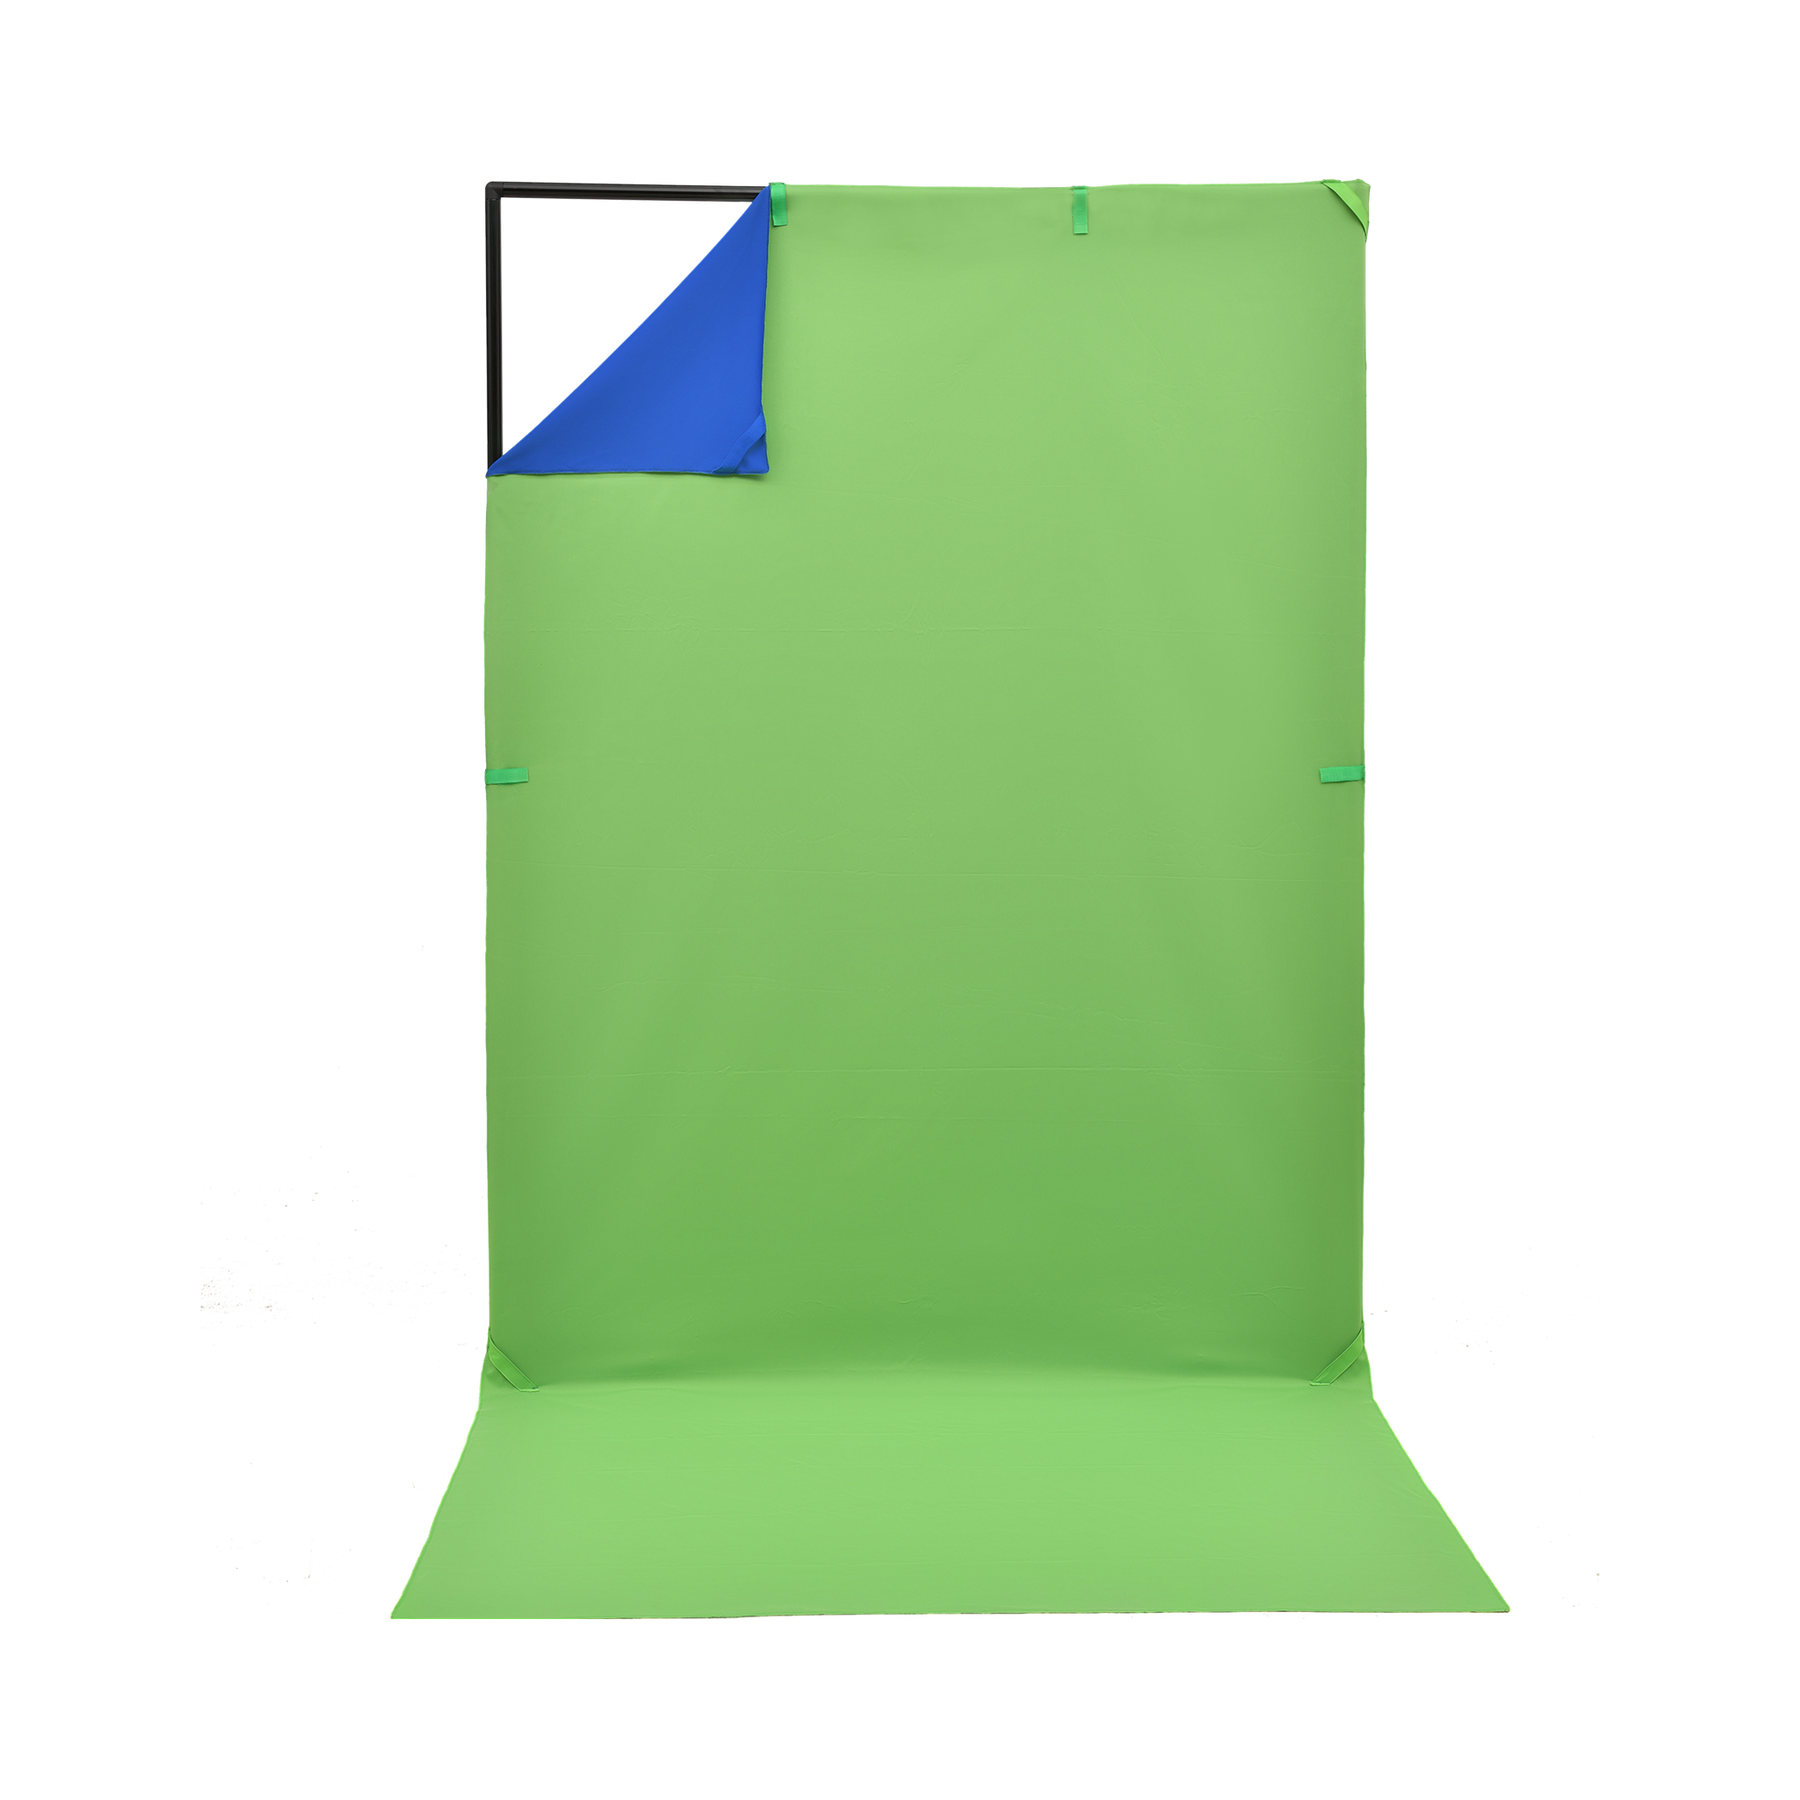 Portable green screen set 150 x 200 cm incl. background